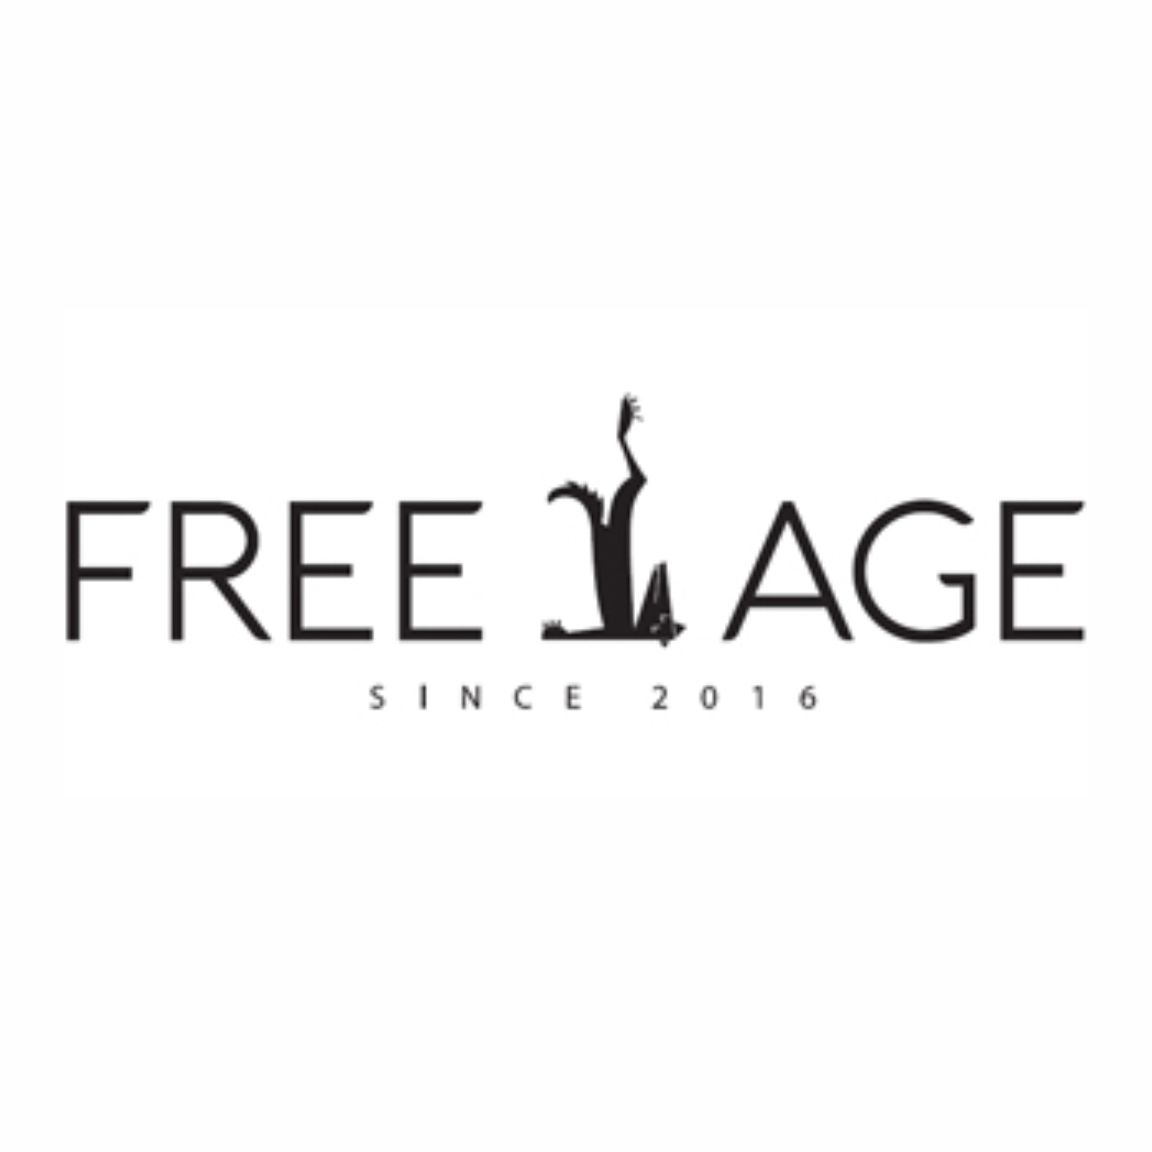 FREE AGE